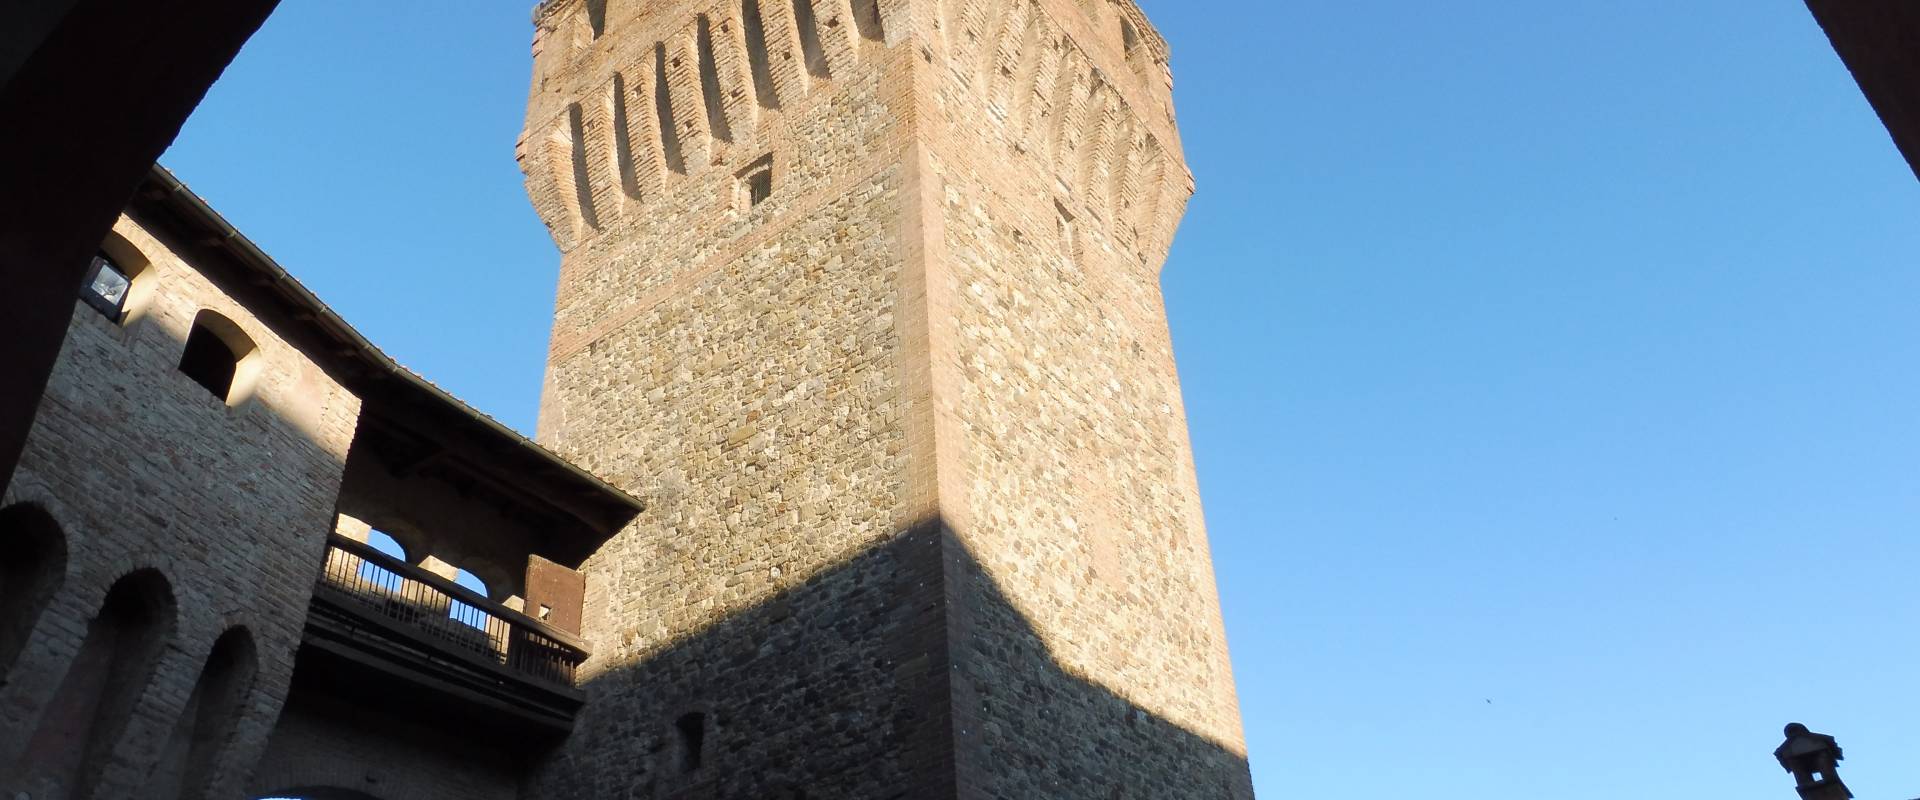 Mirco, Castello di Vignola, veduta sulla torre antica nonantolana photo by Mirco Malaguti